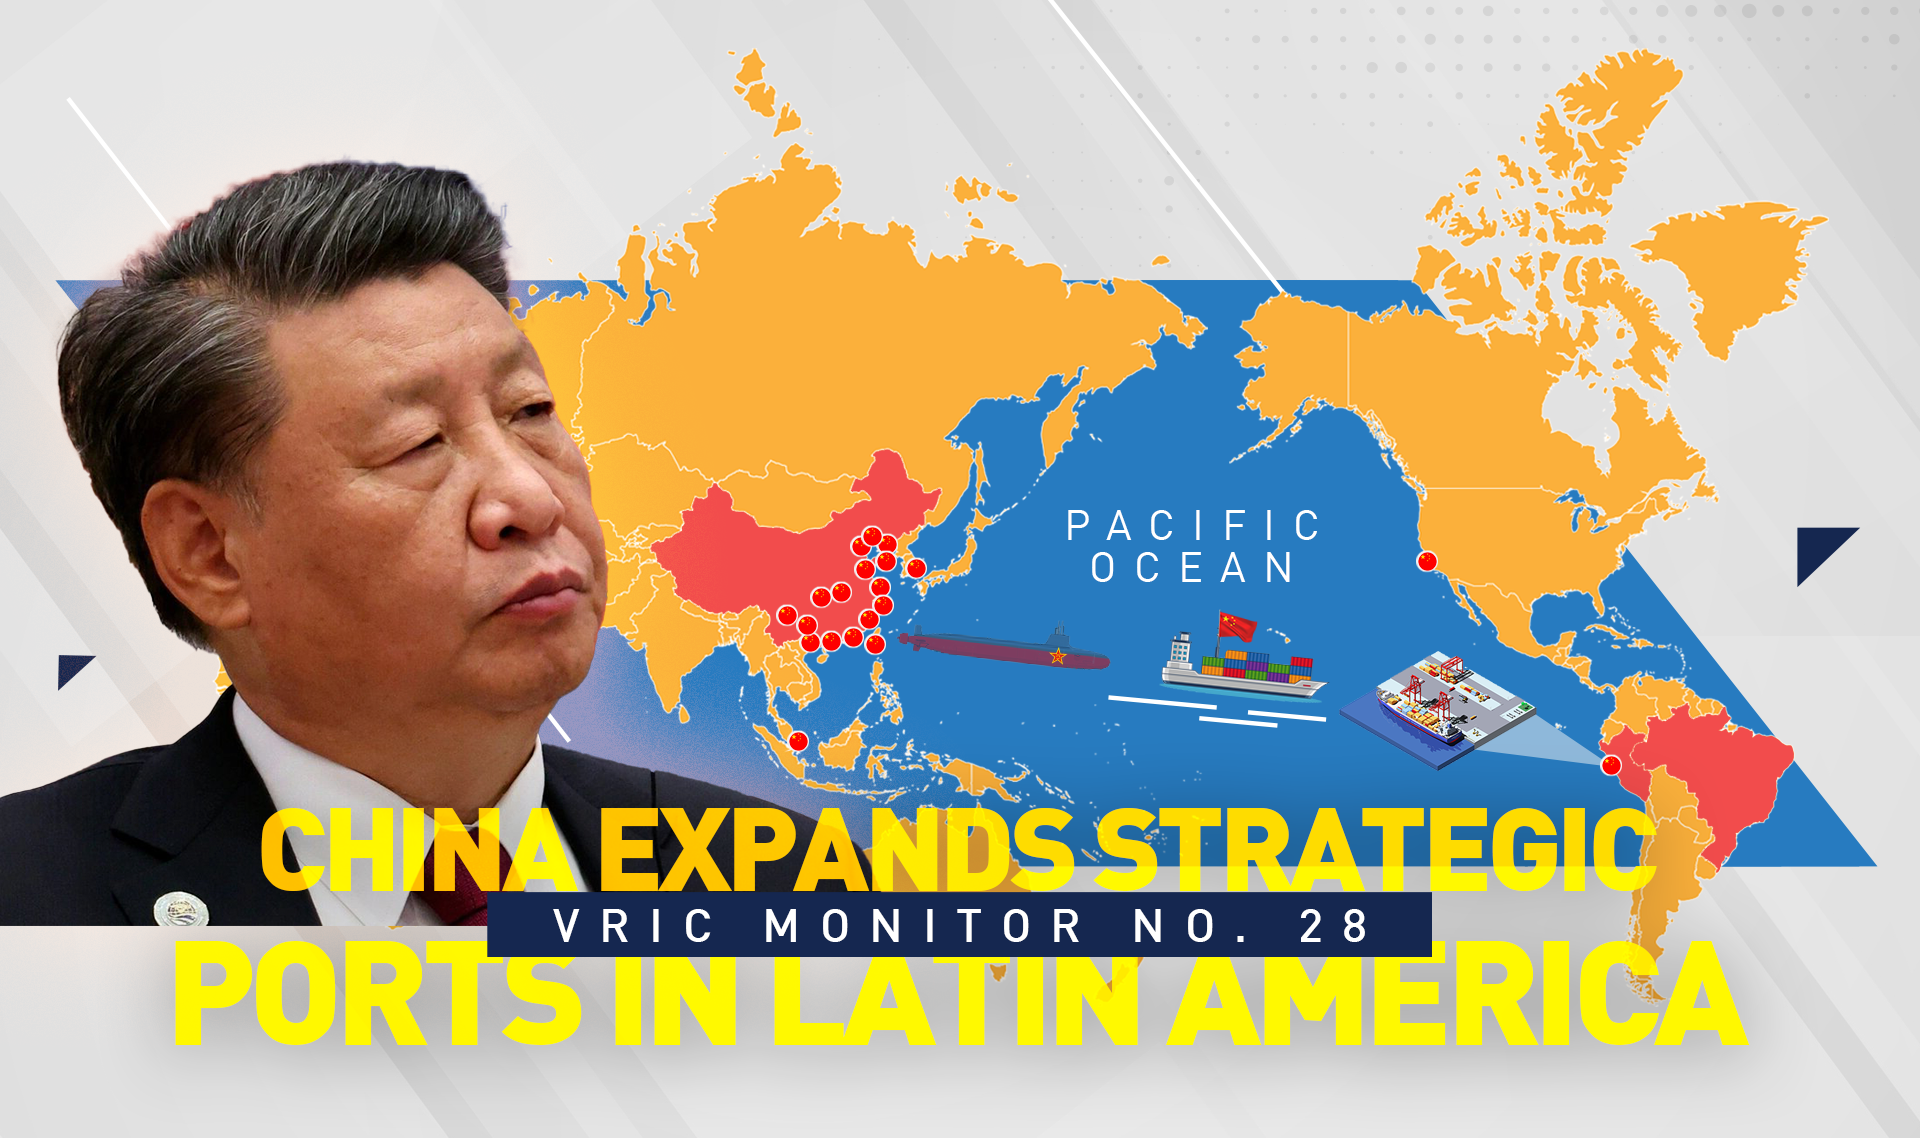 VRIC MONITOR No. 28 | China Expands Strategic Ports in Latin America